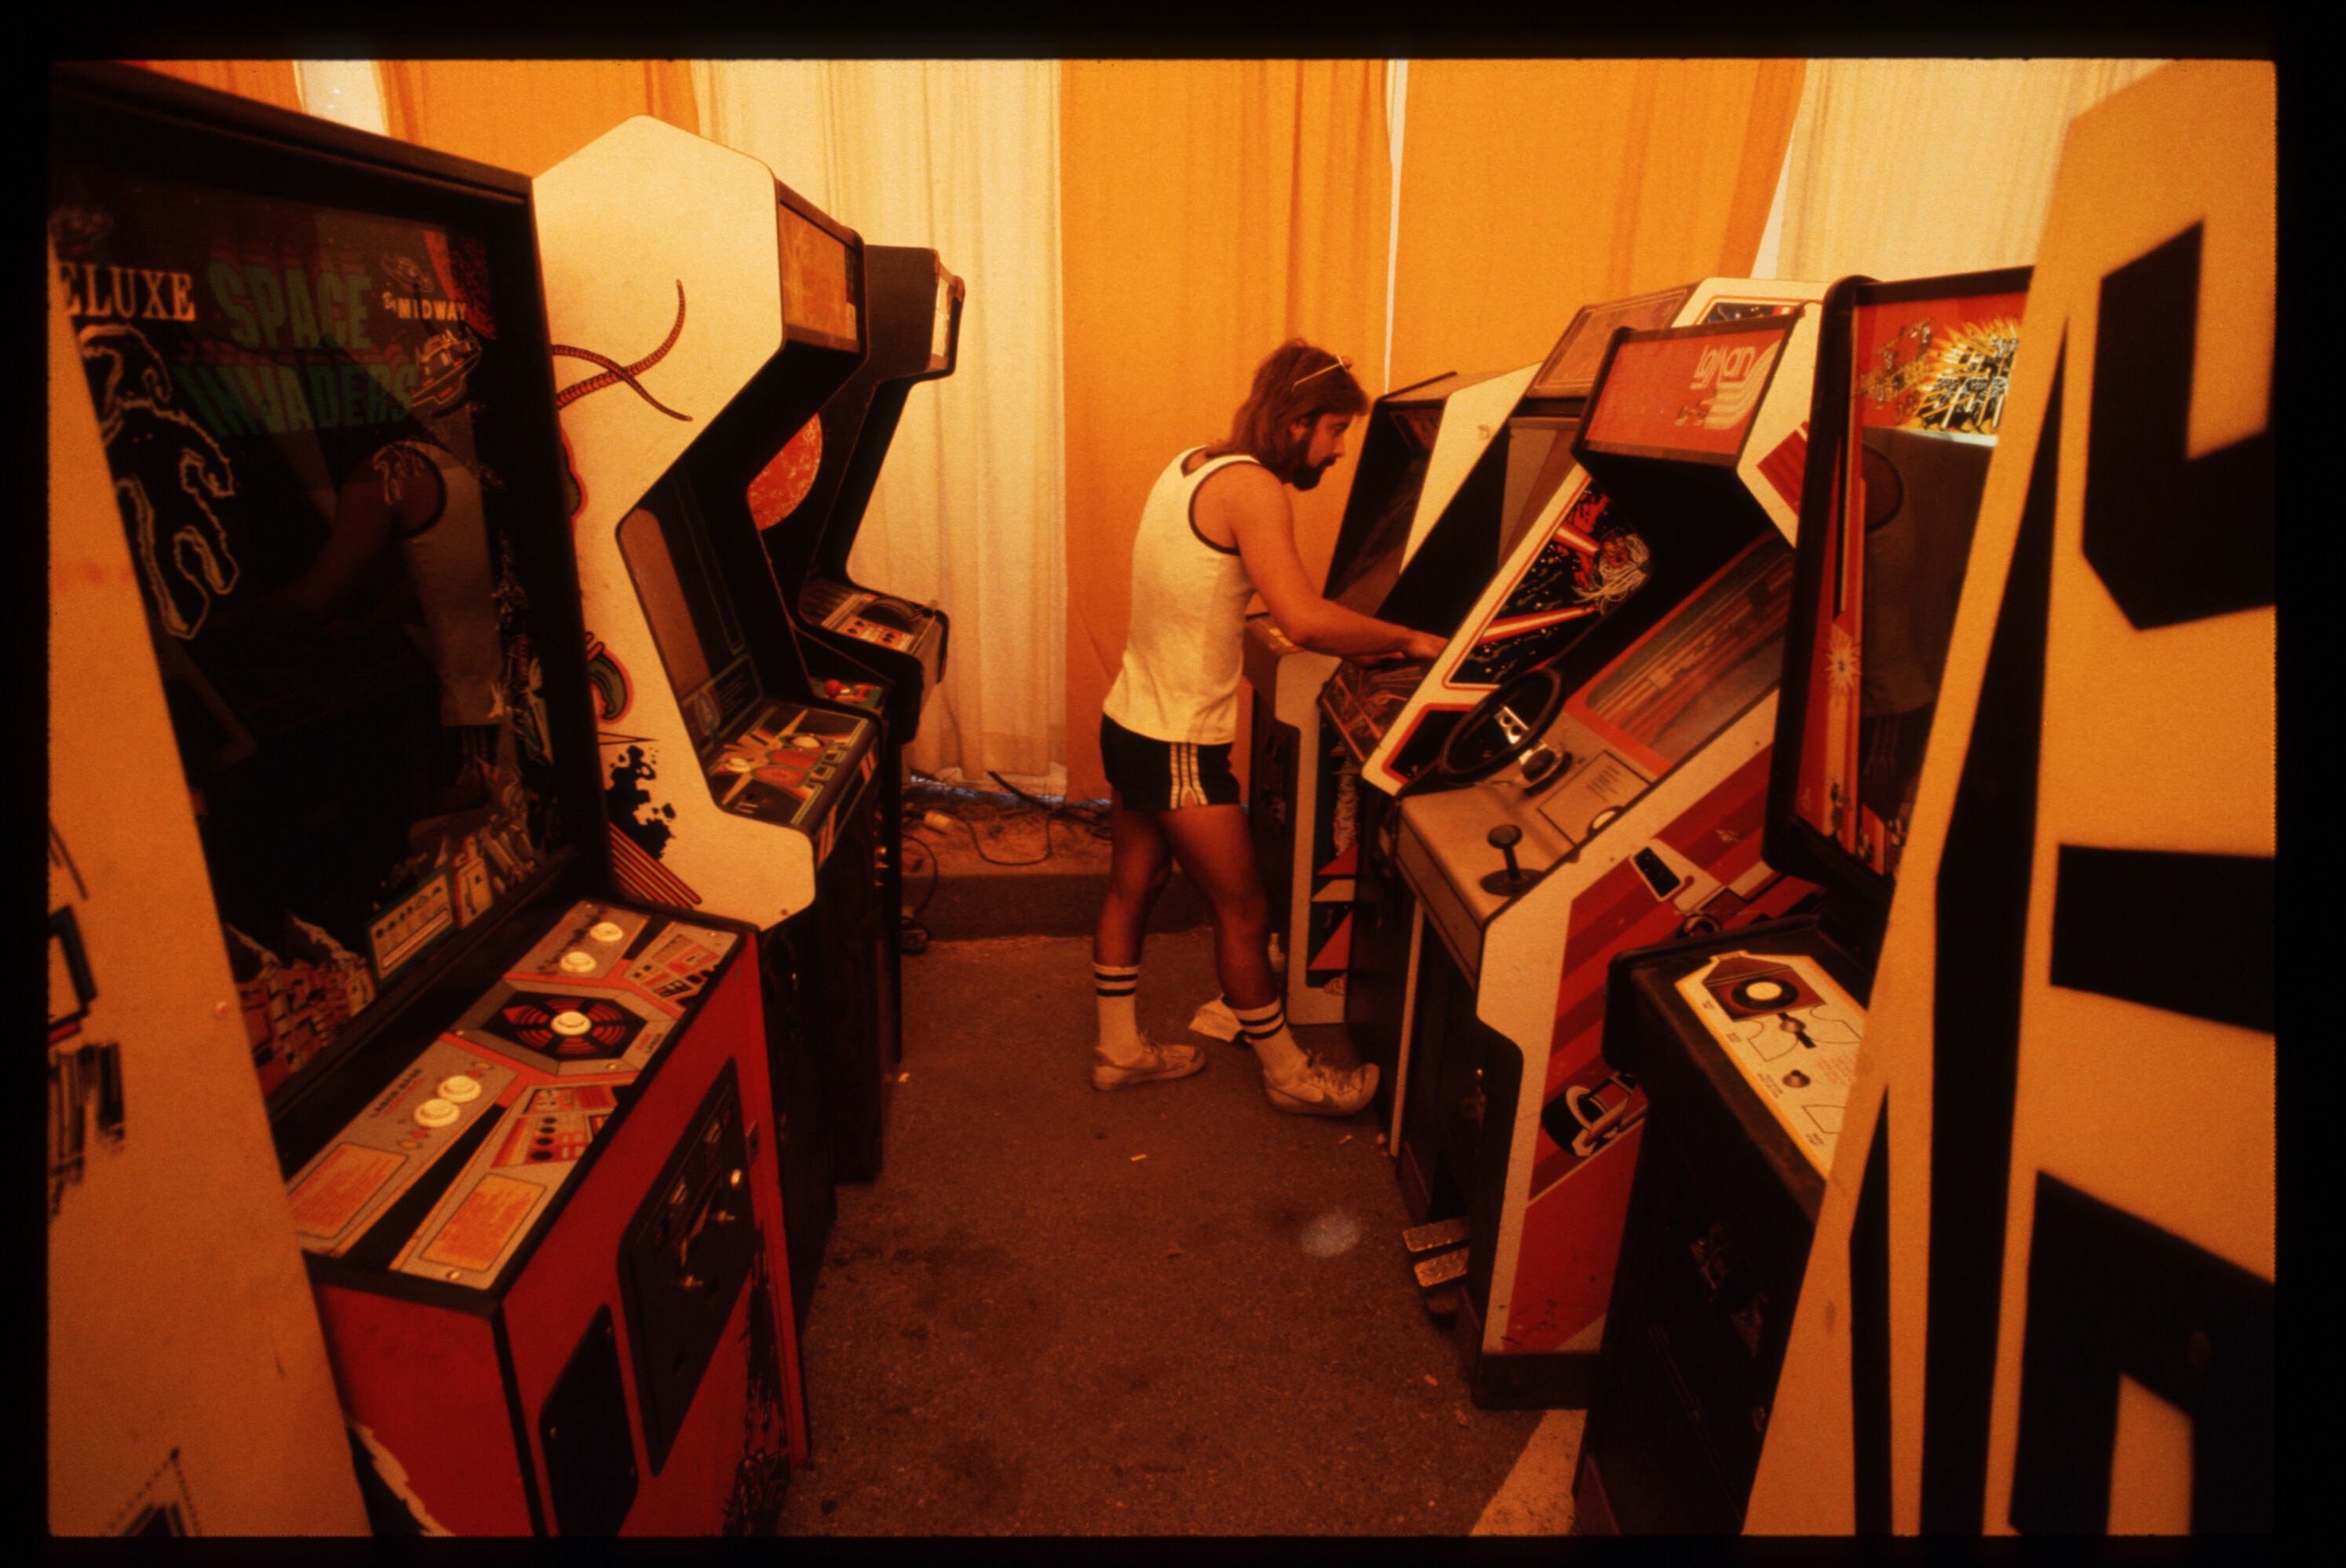 Man playing video game at 1980s arcade